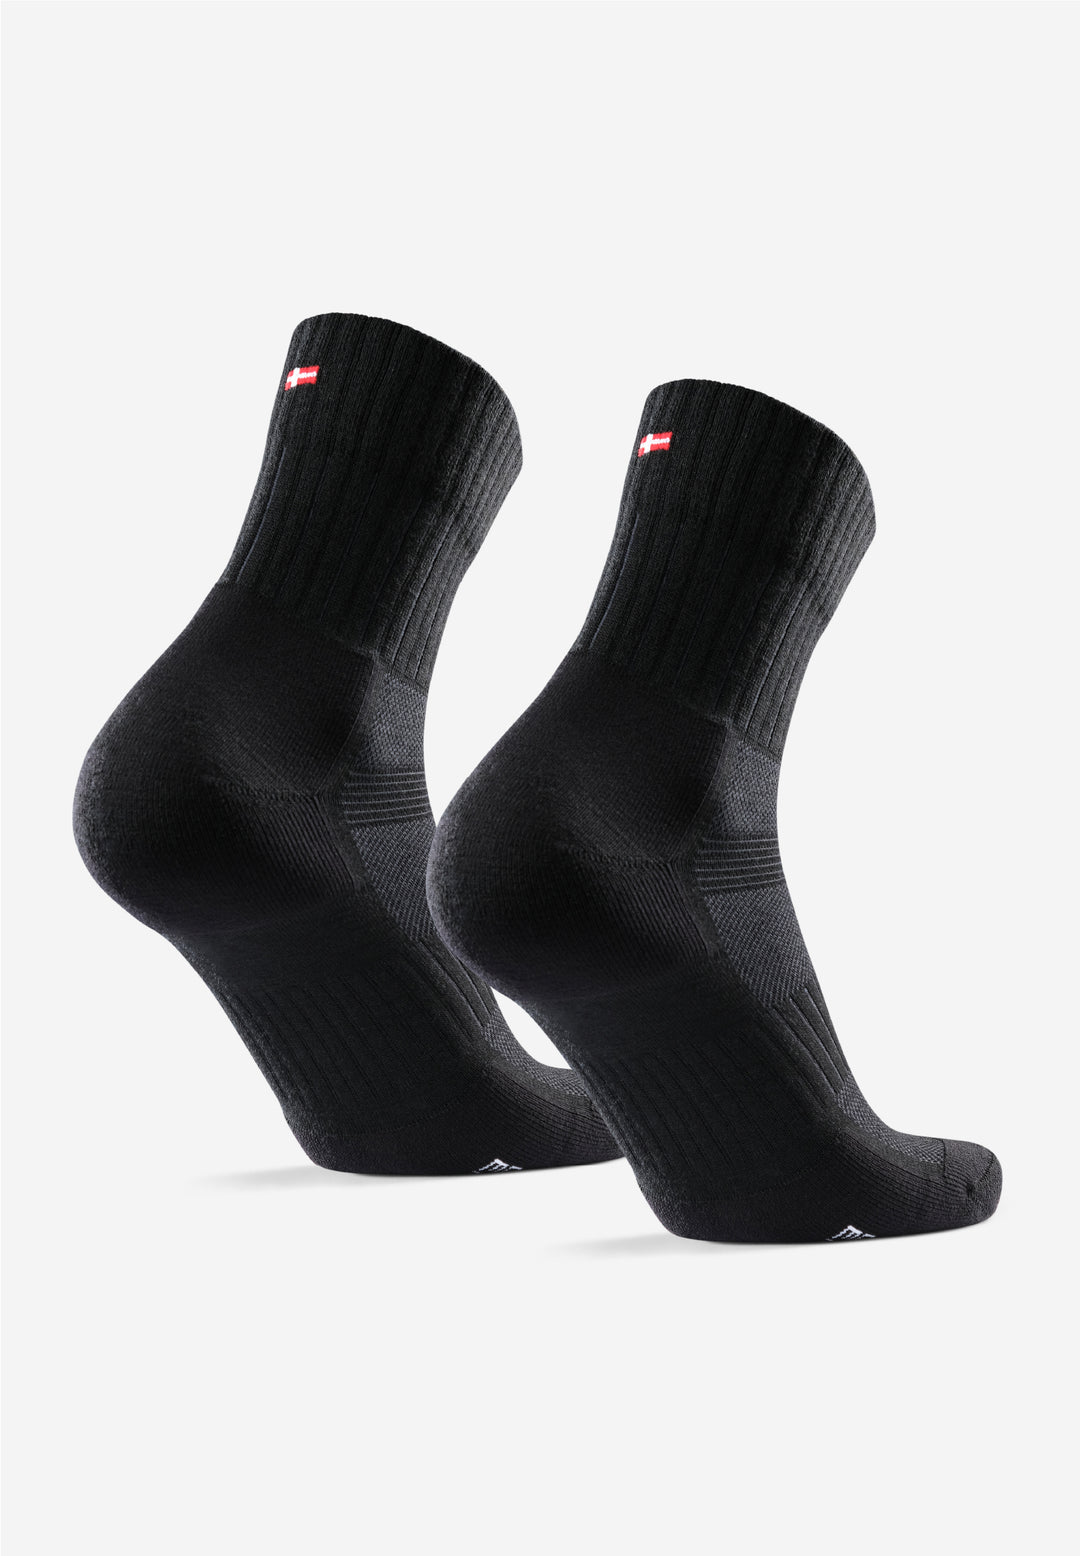 Danish Endurance - Our Merino Wool Booster Running Socks are